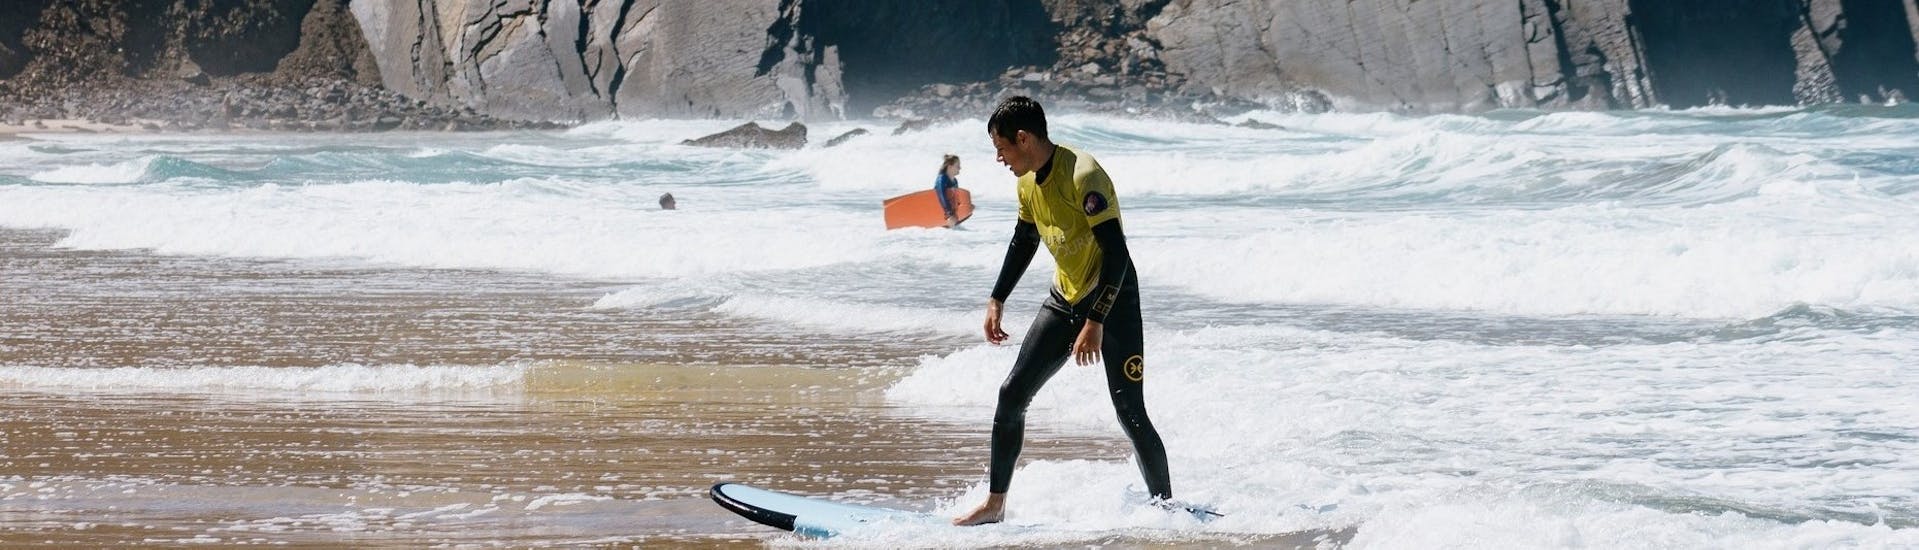 Privater Surfkurs in Portimão (ab 8 J.) für Anfänger.